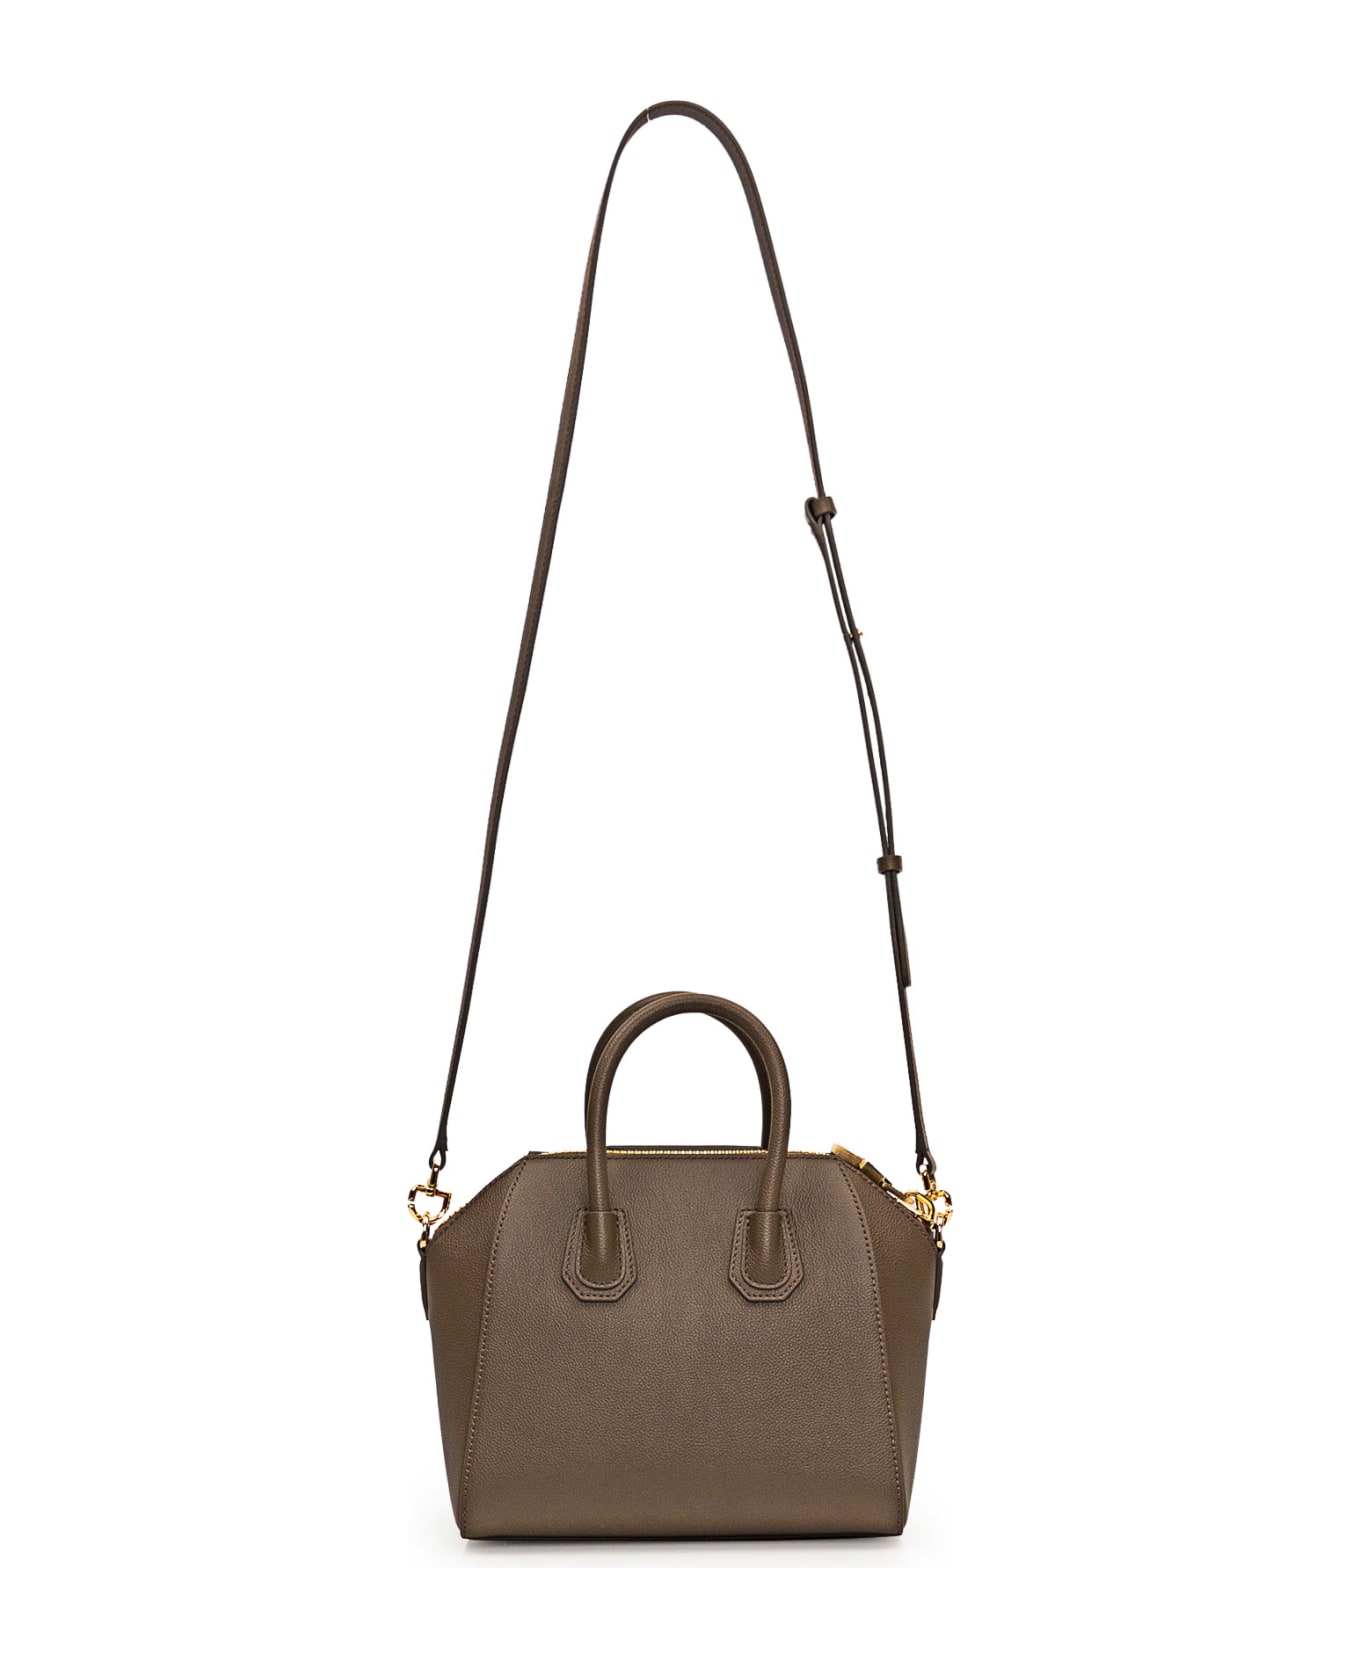 Givenchy Antigona Handbag - Taupe トートバッグ